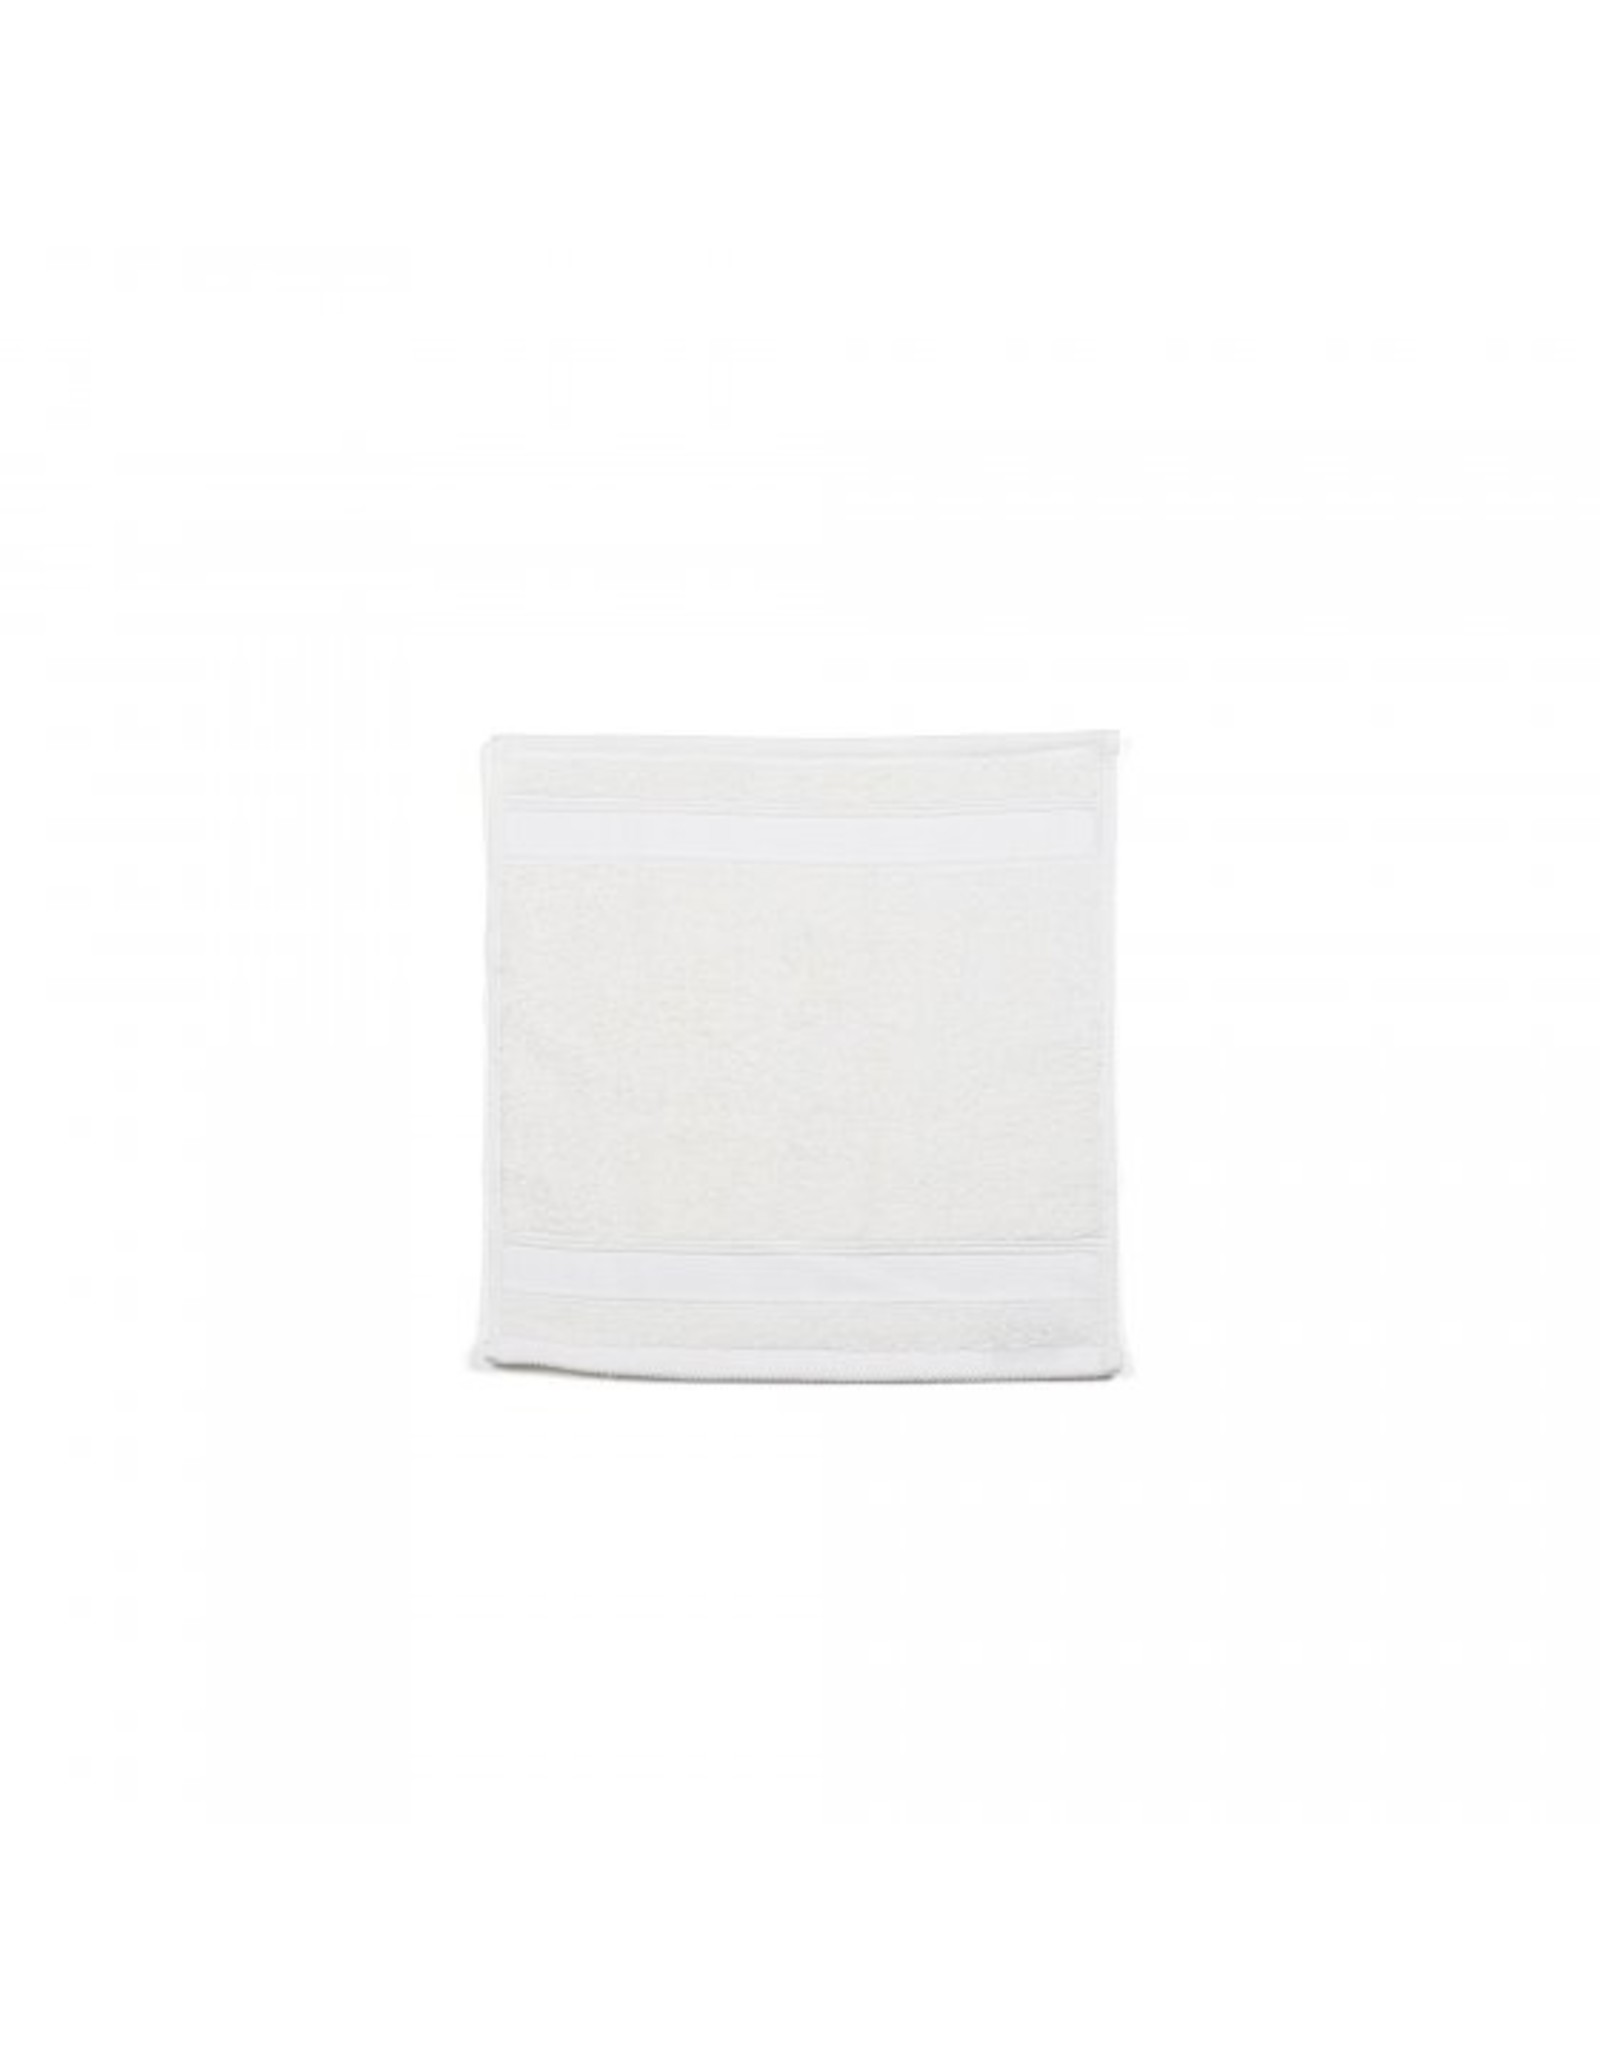 Simi Optic White Wash Cloth 12 x 12